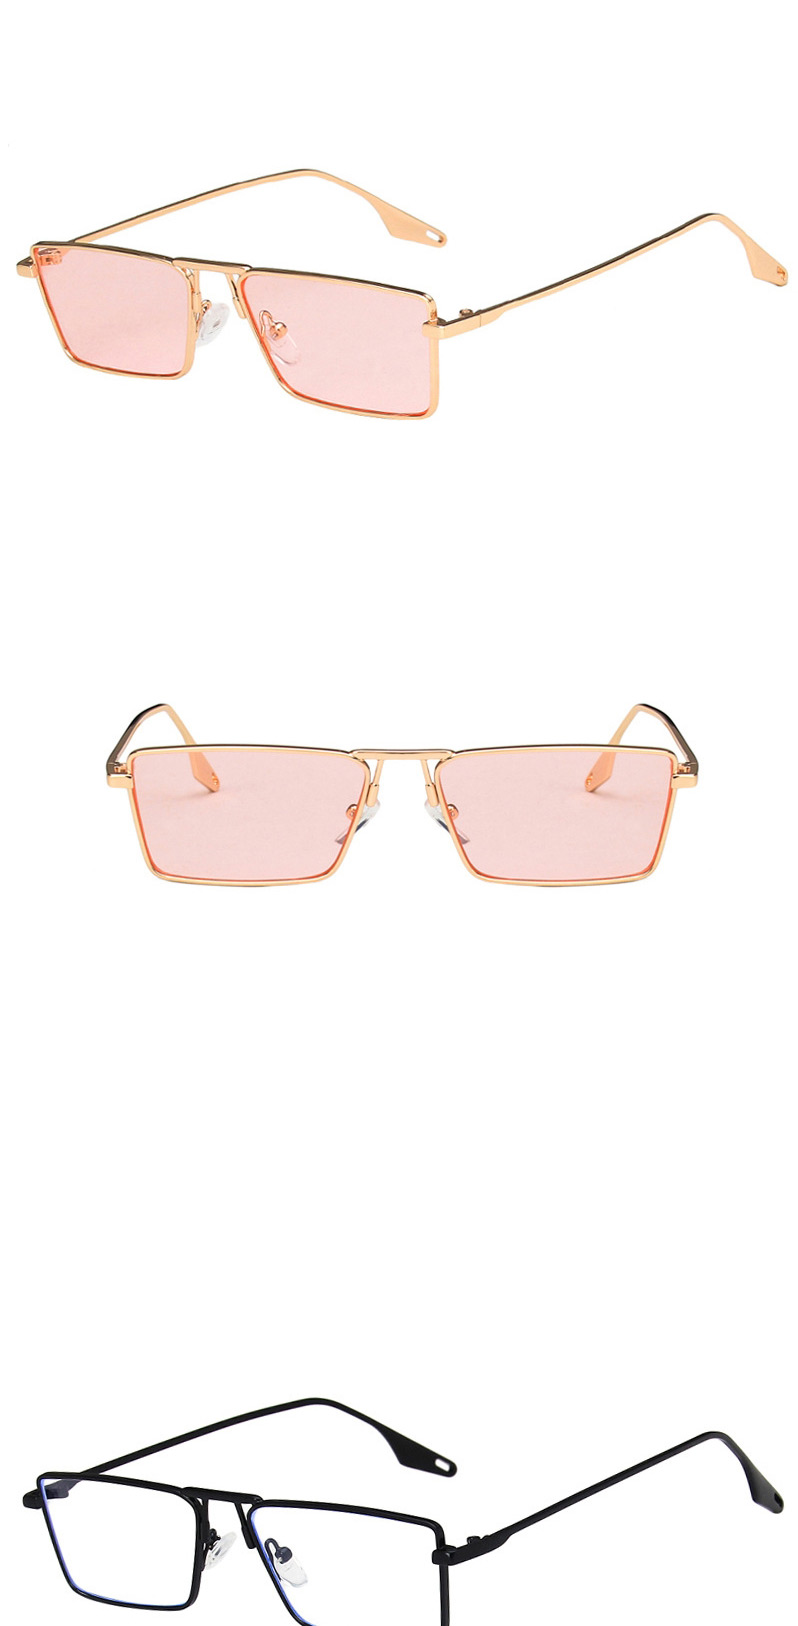 Fashion Golden Frame Powder Metal Small Frame Uv Protection Sunglasses,Women Sunglasses